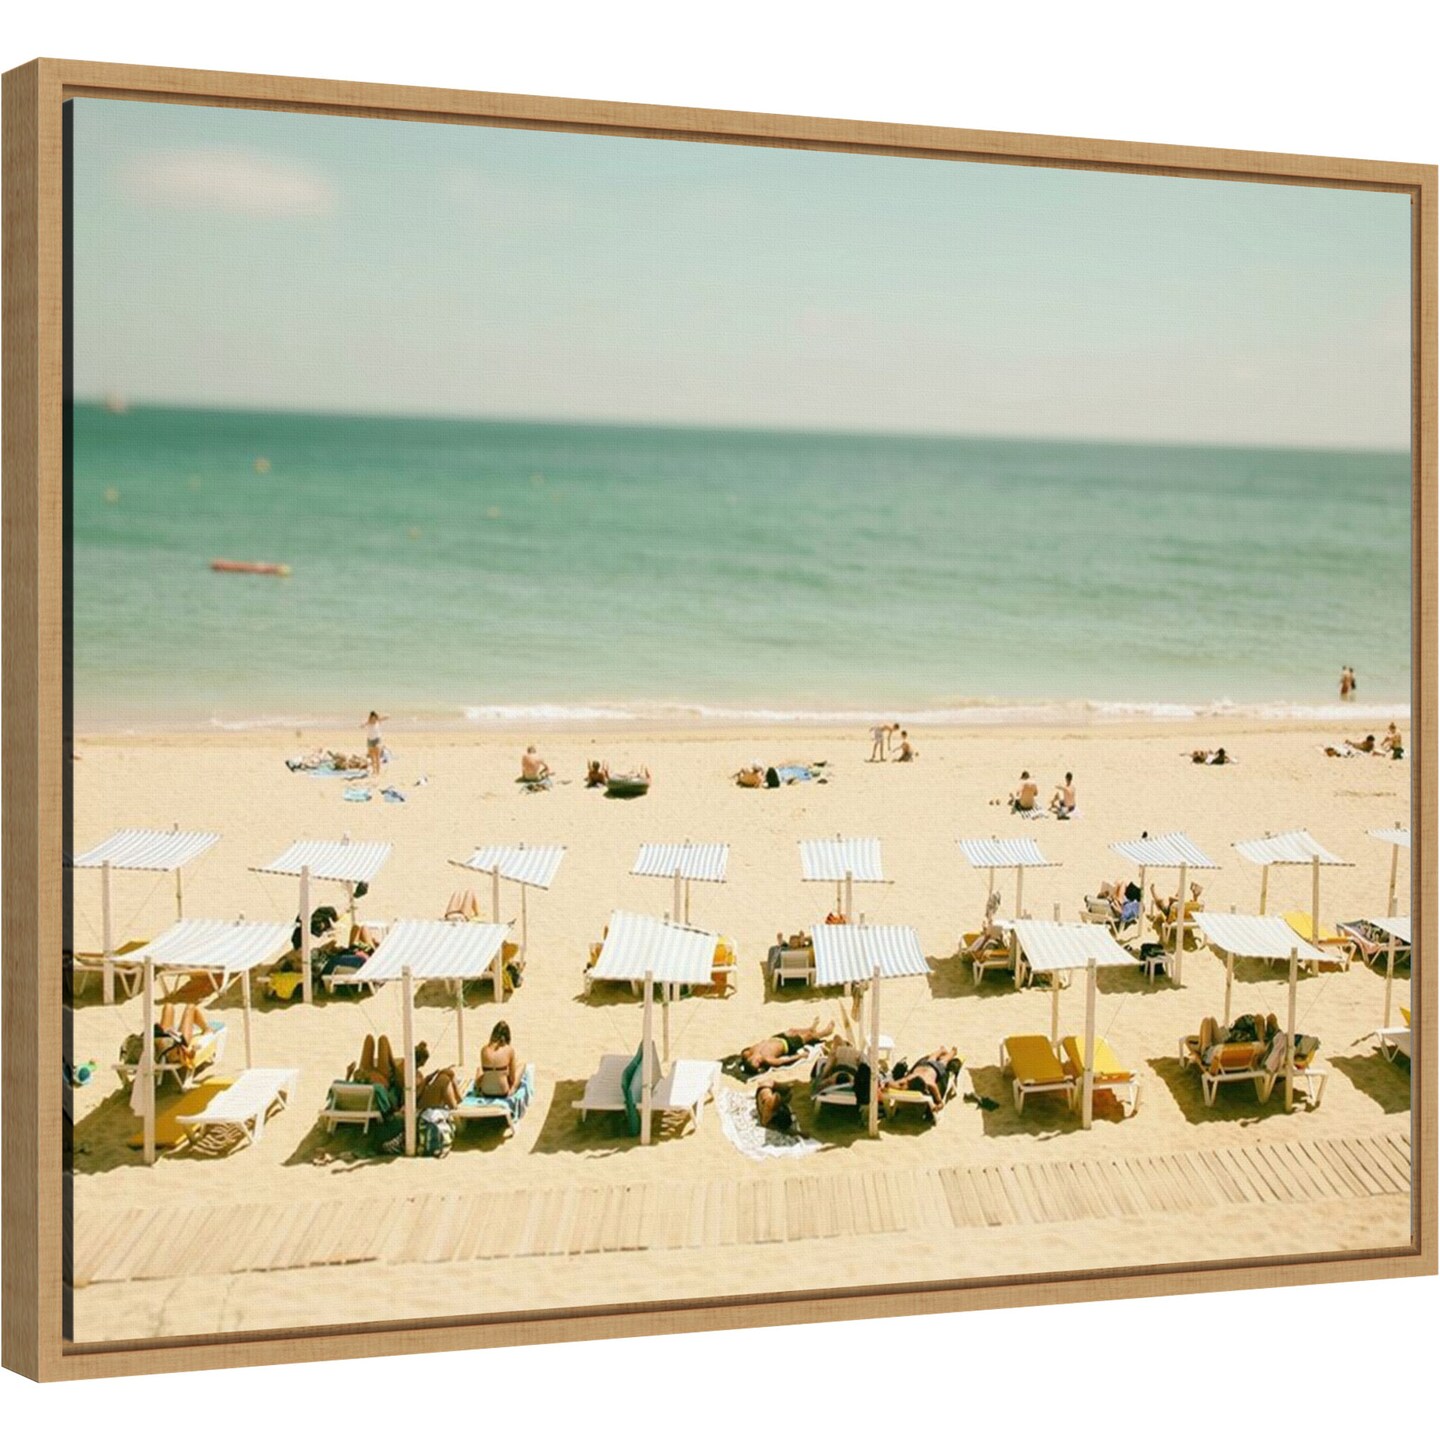 Seaside 3 (Beach) by Carina Okula 24-in. W x 18-in. H. Canvas Wall Art Print Framed in Natural